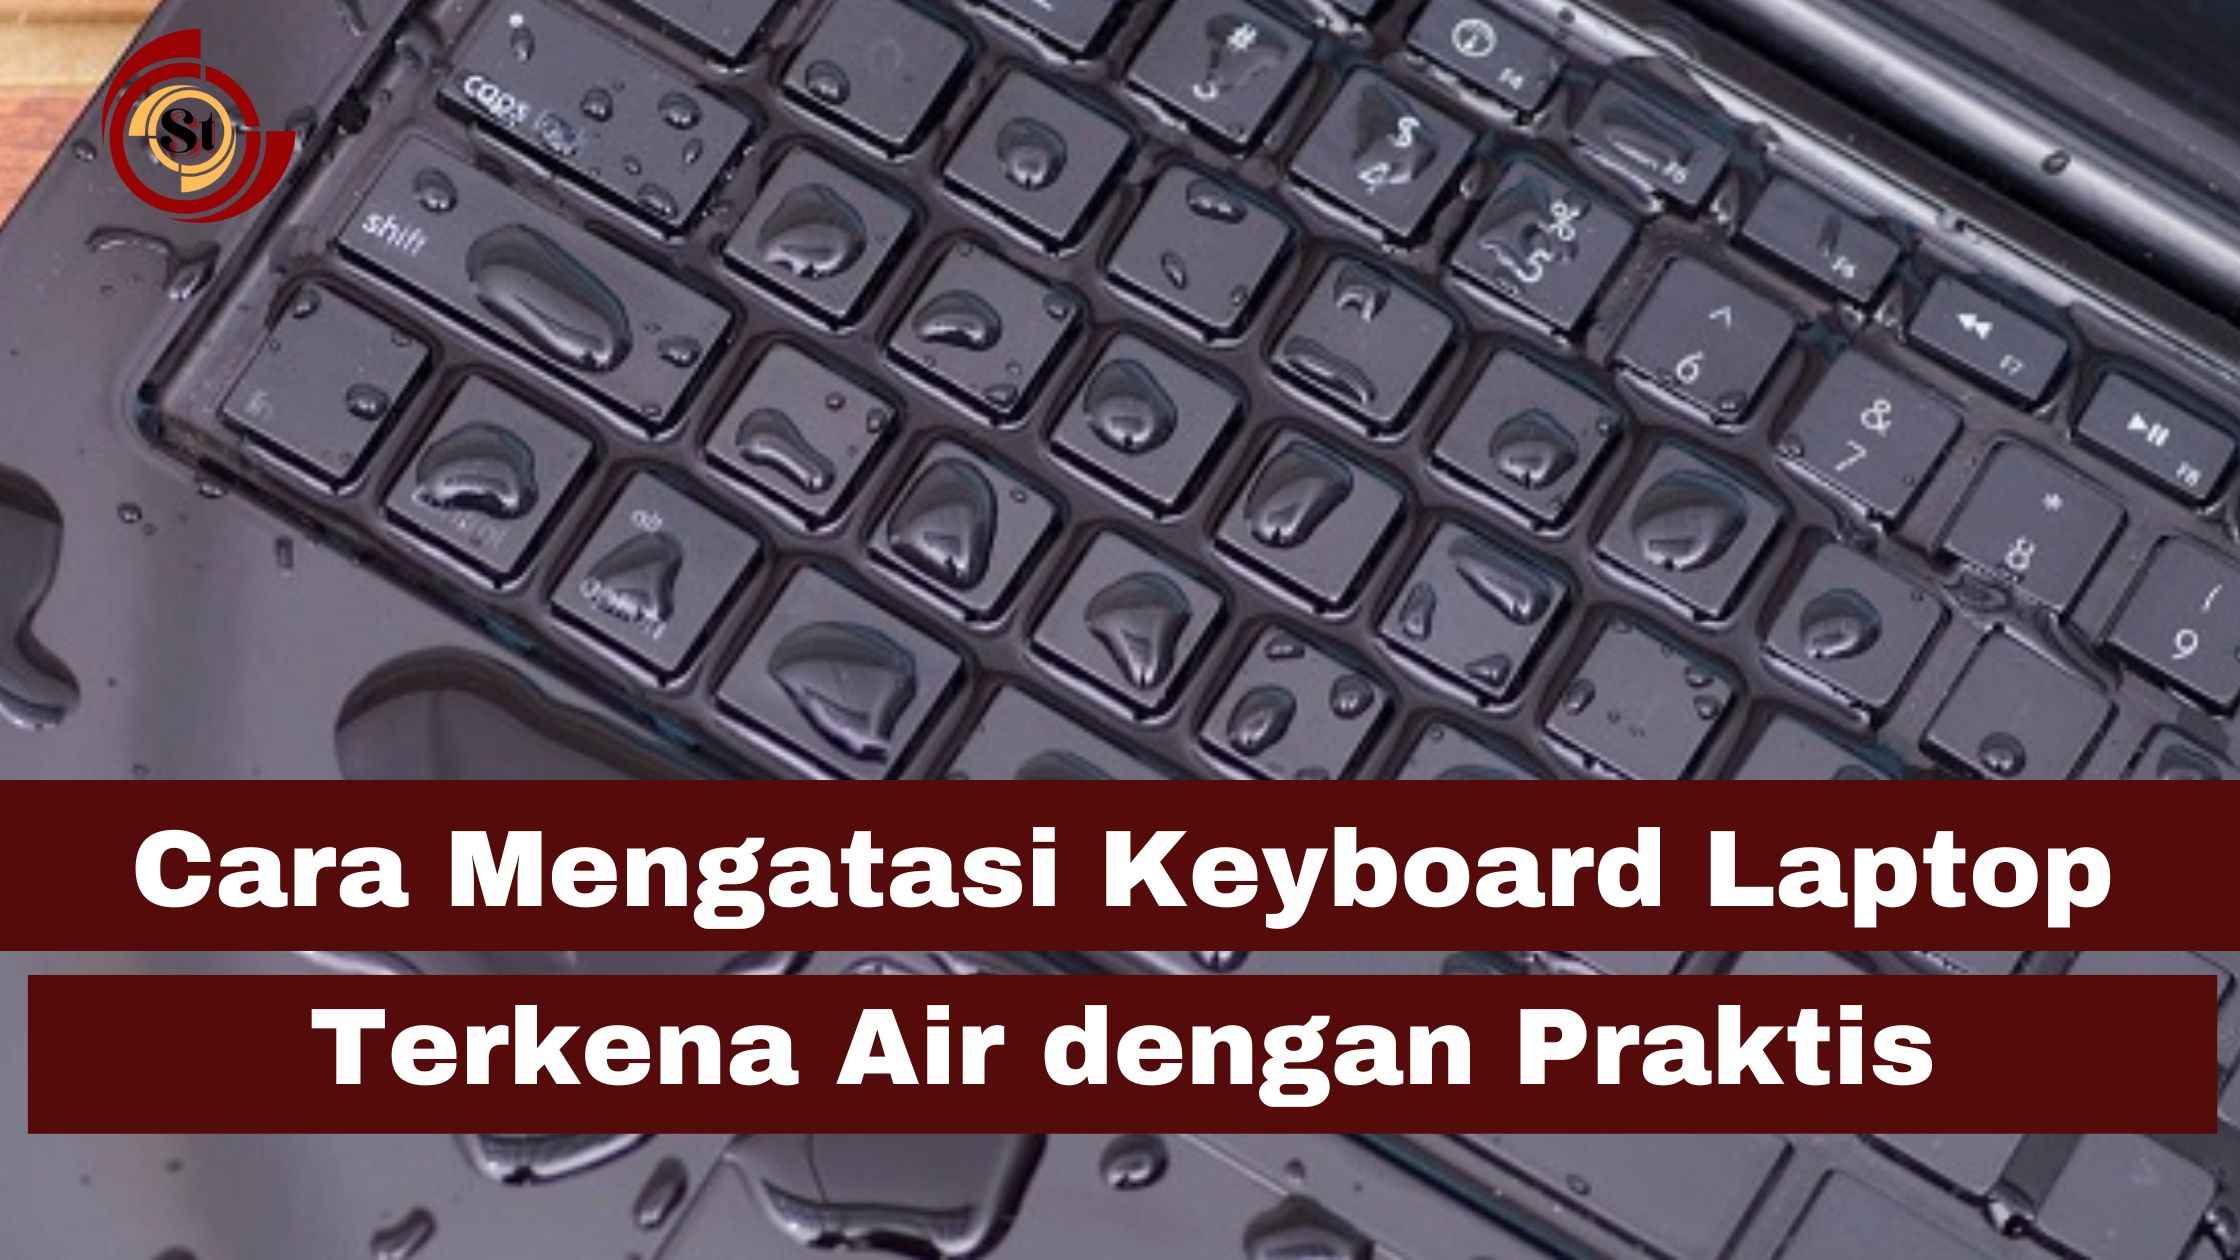 Cara Mengatasi Keyboard Laptop Terkena Air 